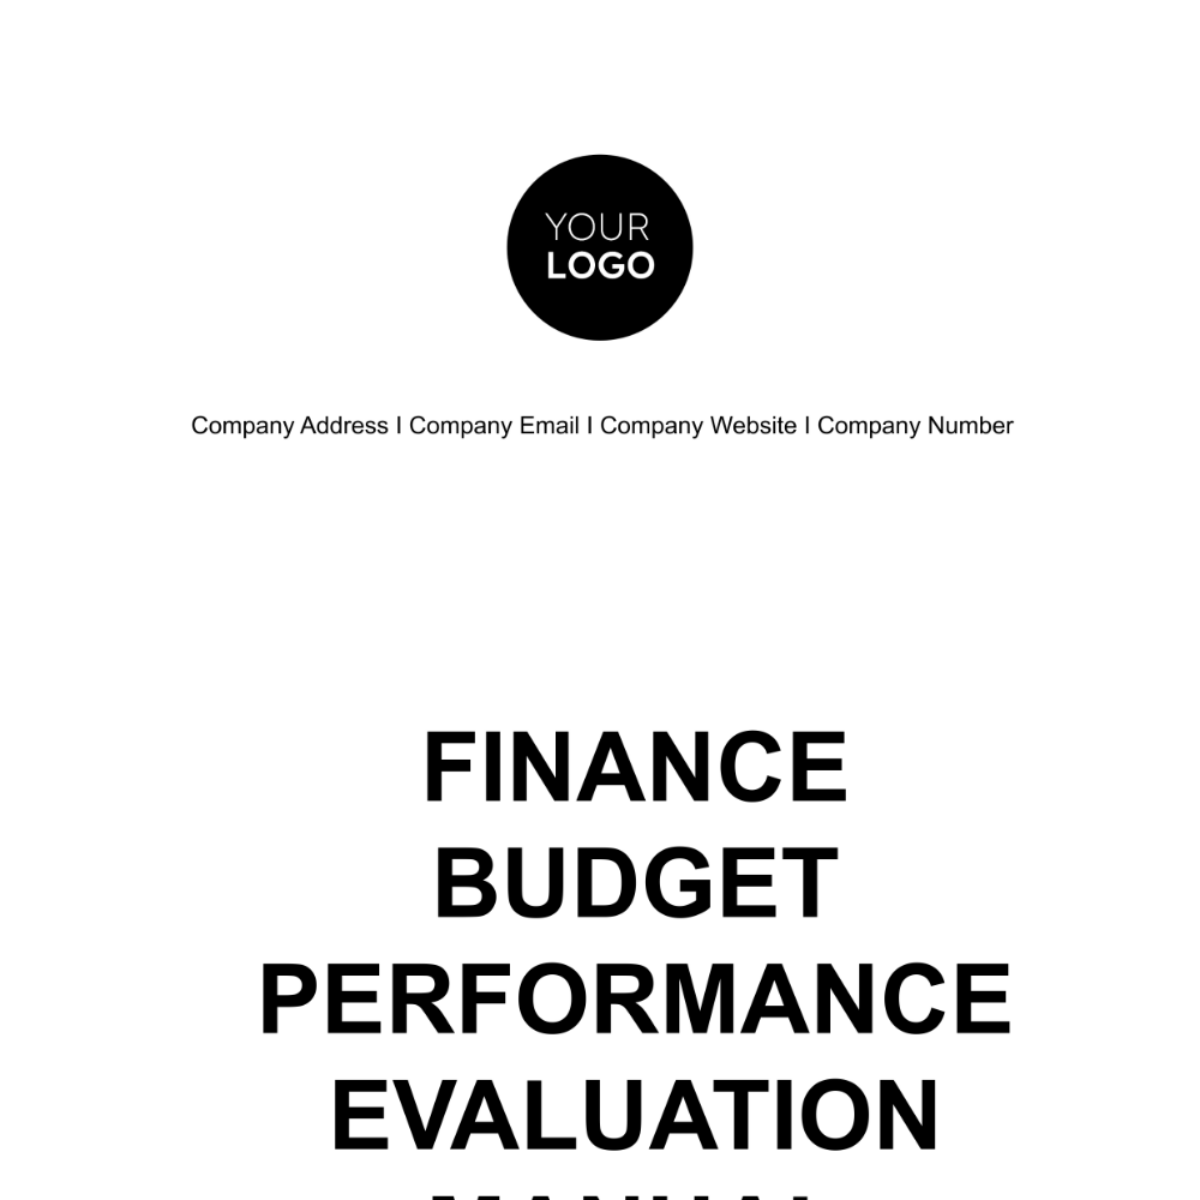 Finance Budget Performance Evaluation Manual Template